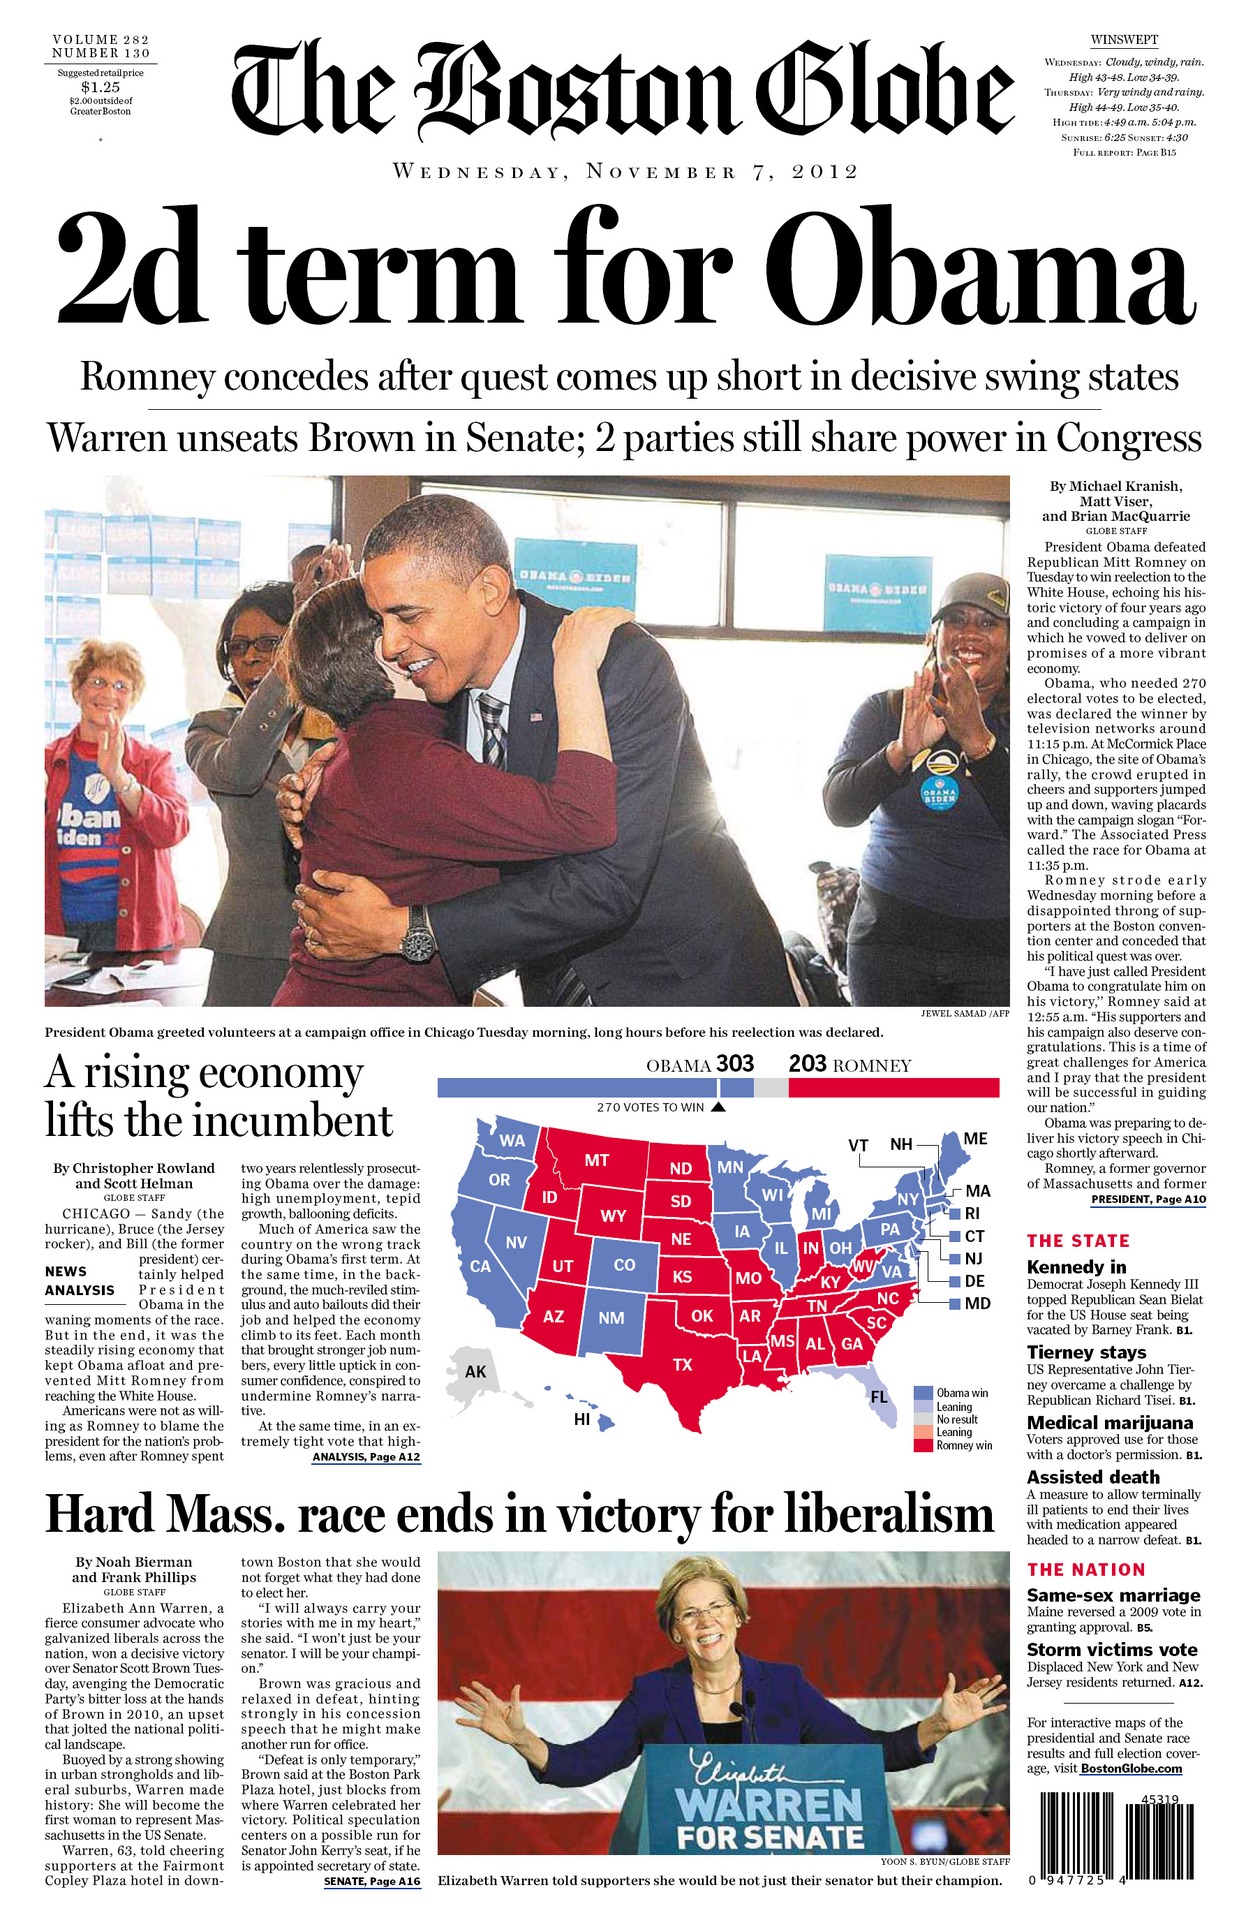 Boston Globe after Obama's re-election